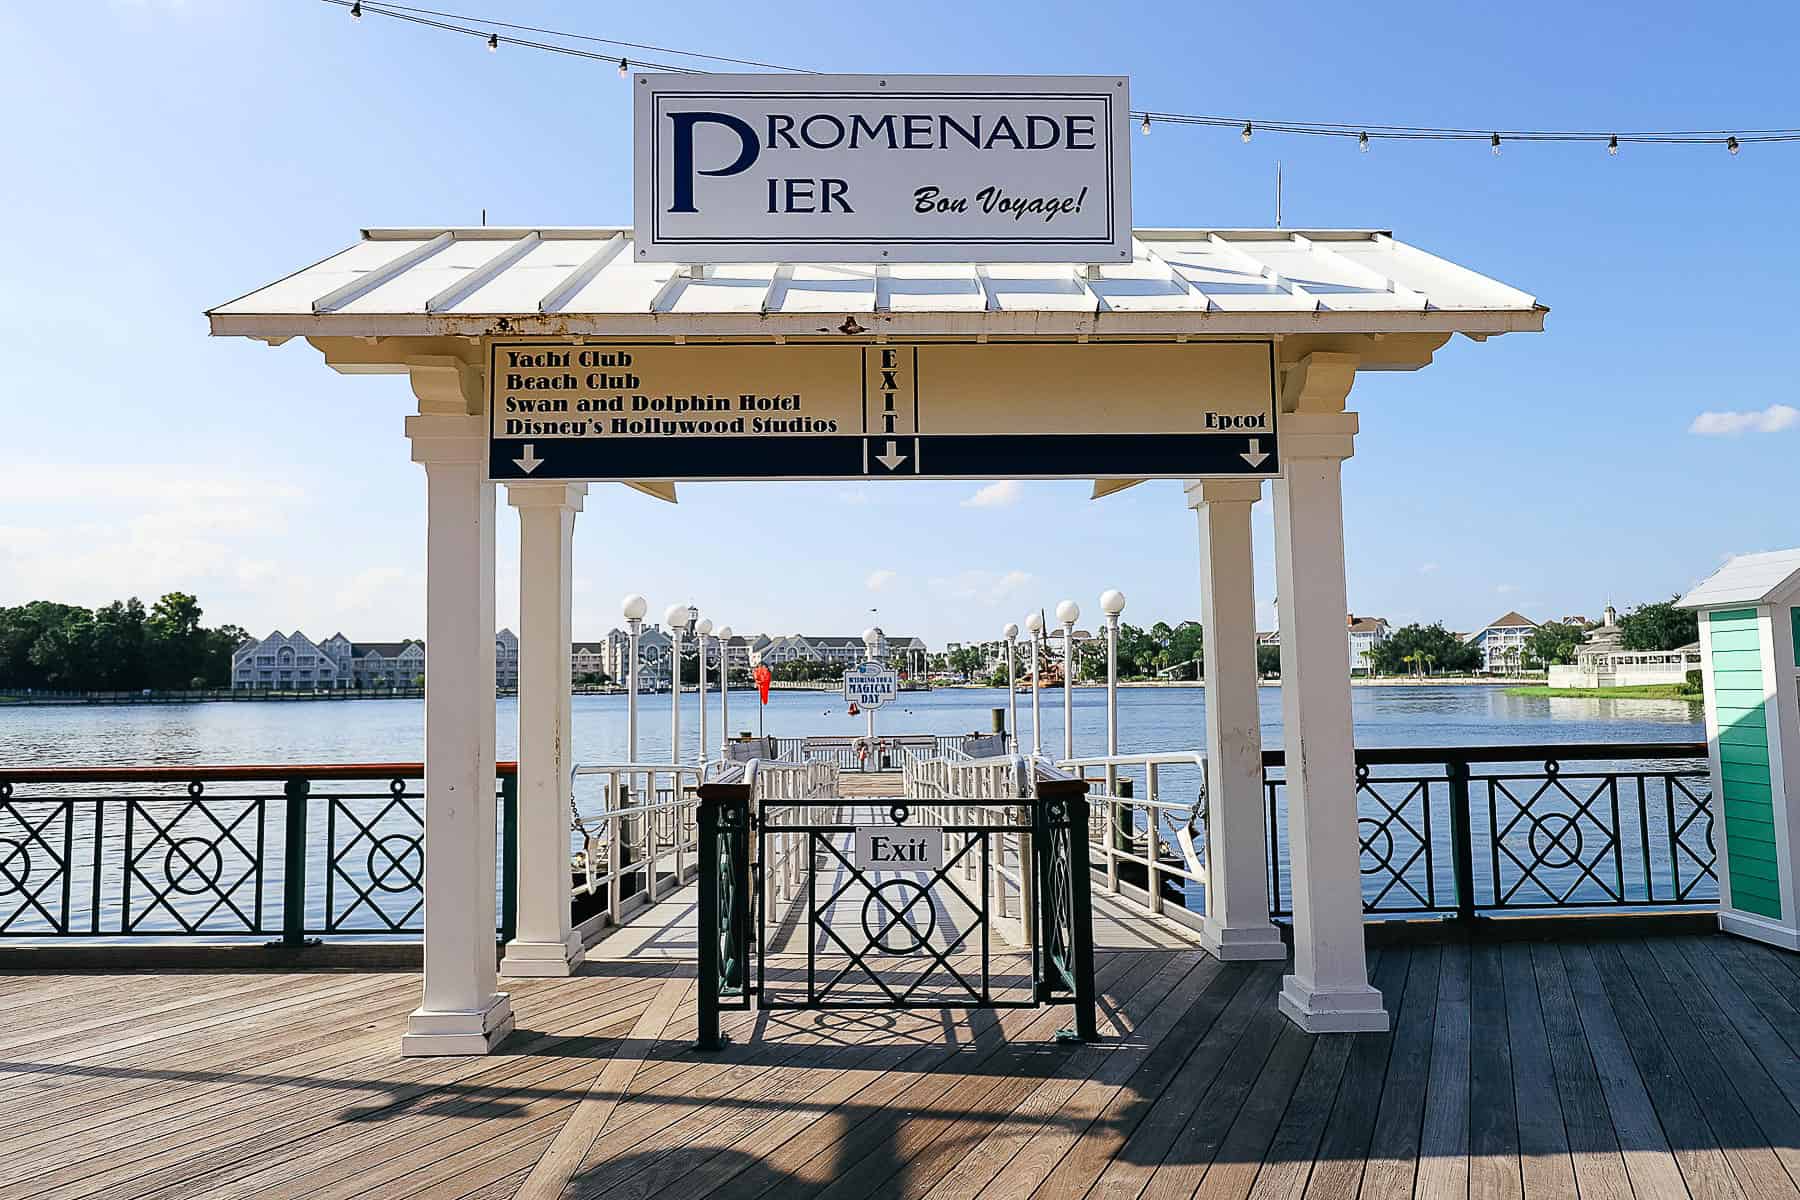 Friendship Boat Dock at Disney's Boardwalk 